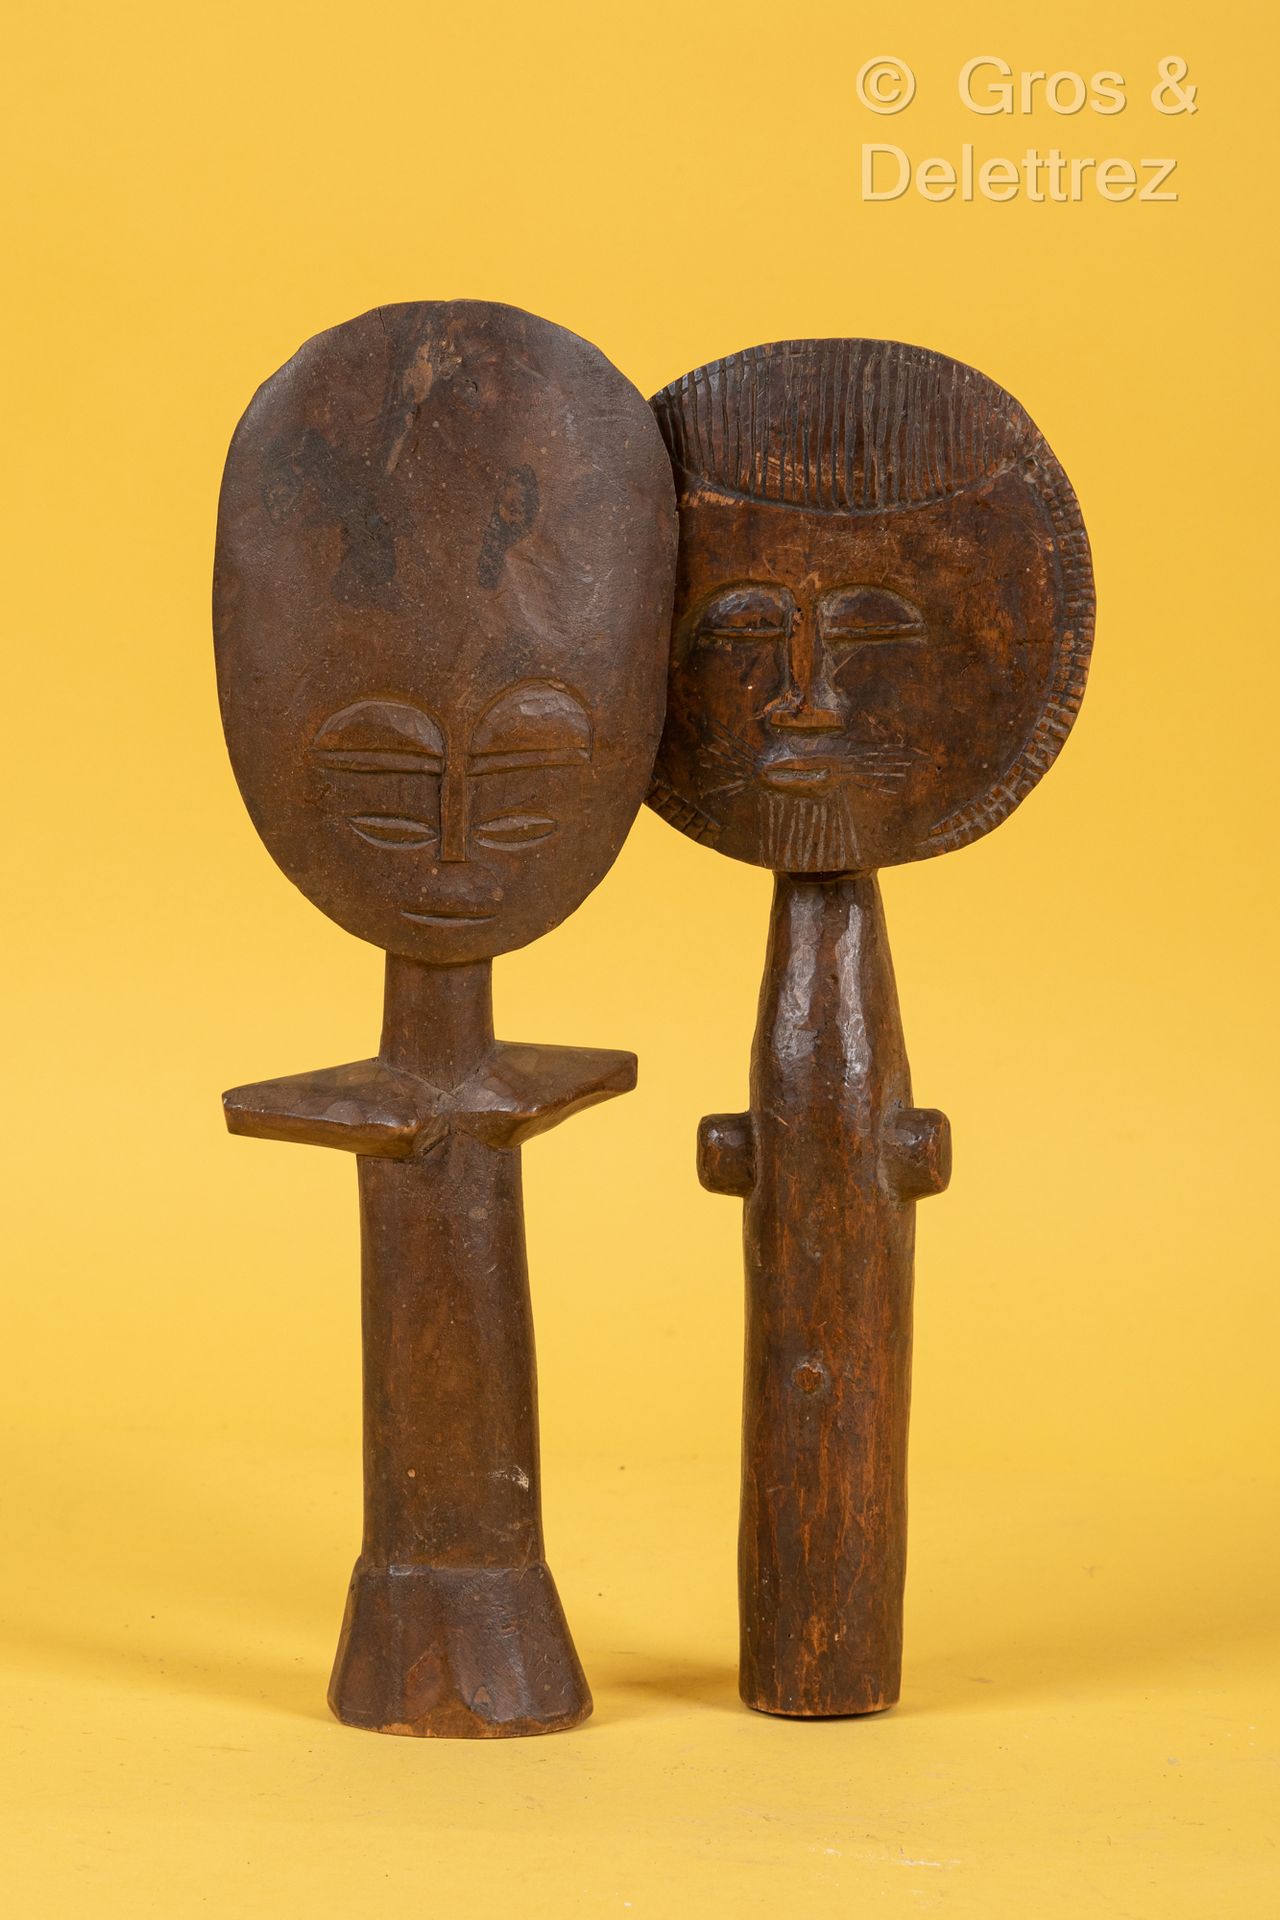 Style Ashanti GHANA 两个木雕娃娃，一个是人脸，另一个是狮脸。
高度：31和31.5厘米。